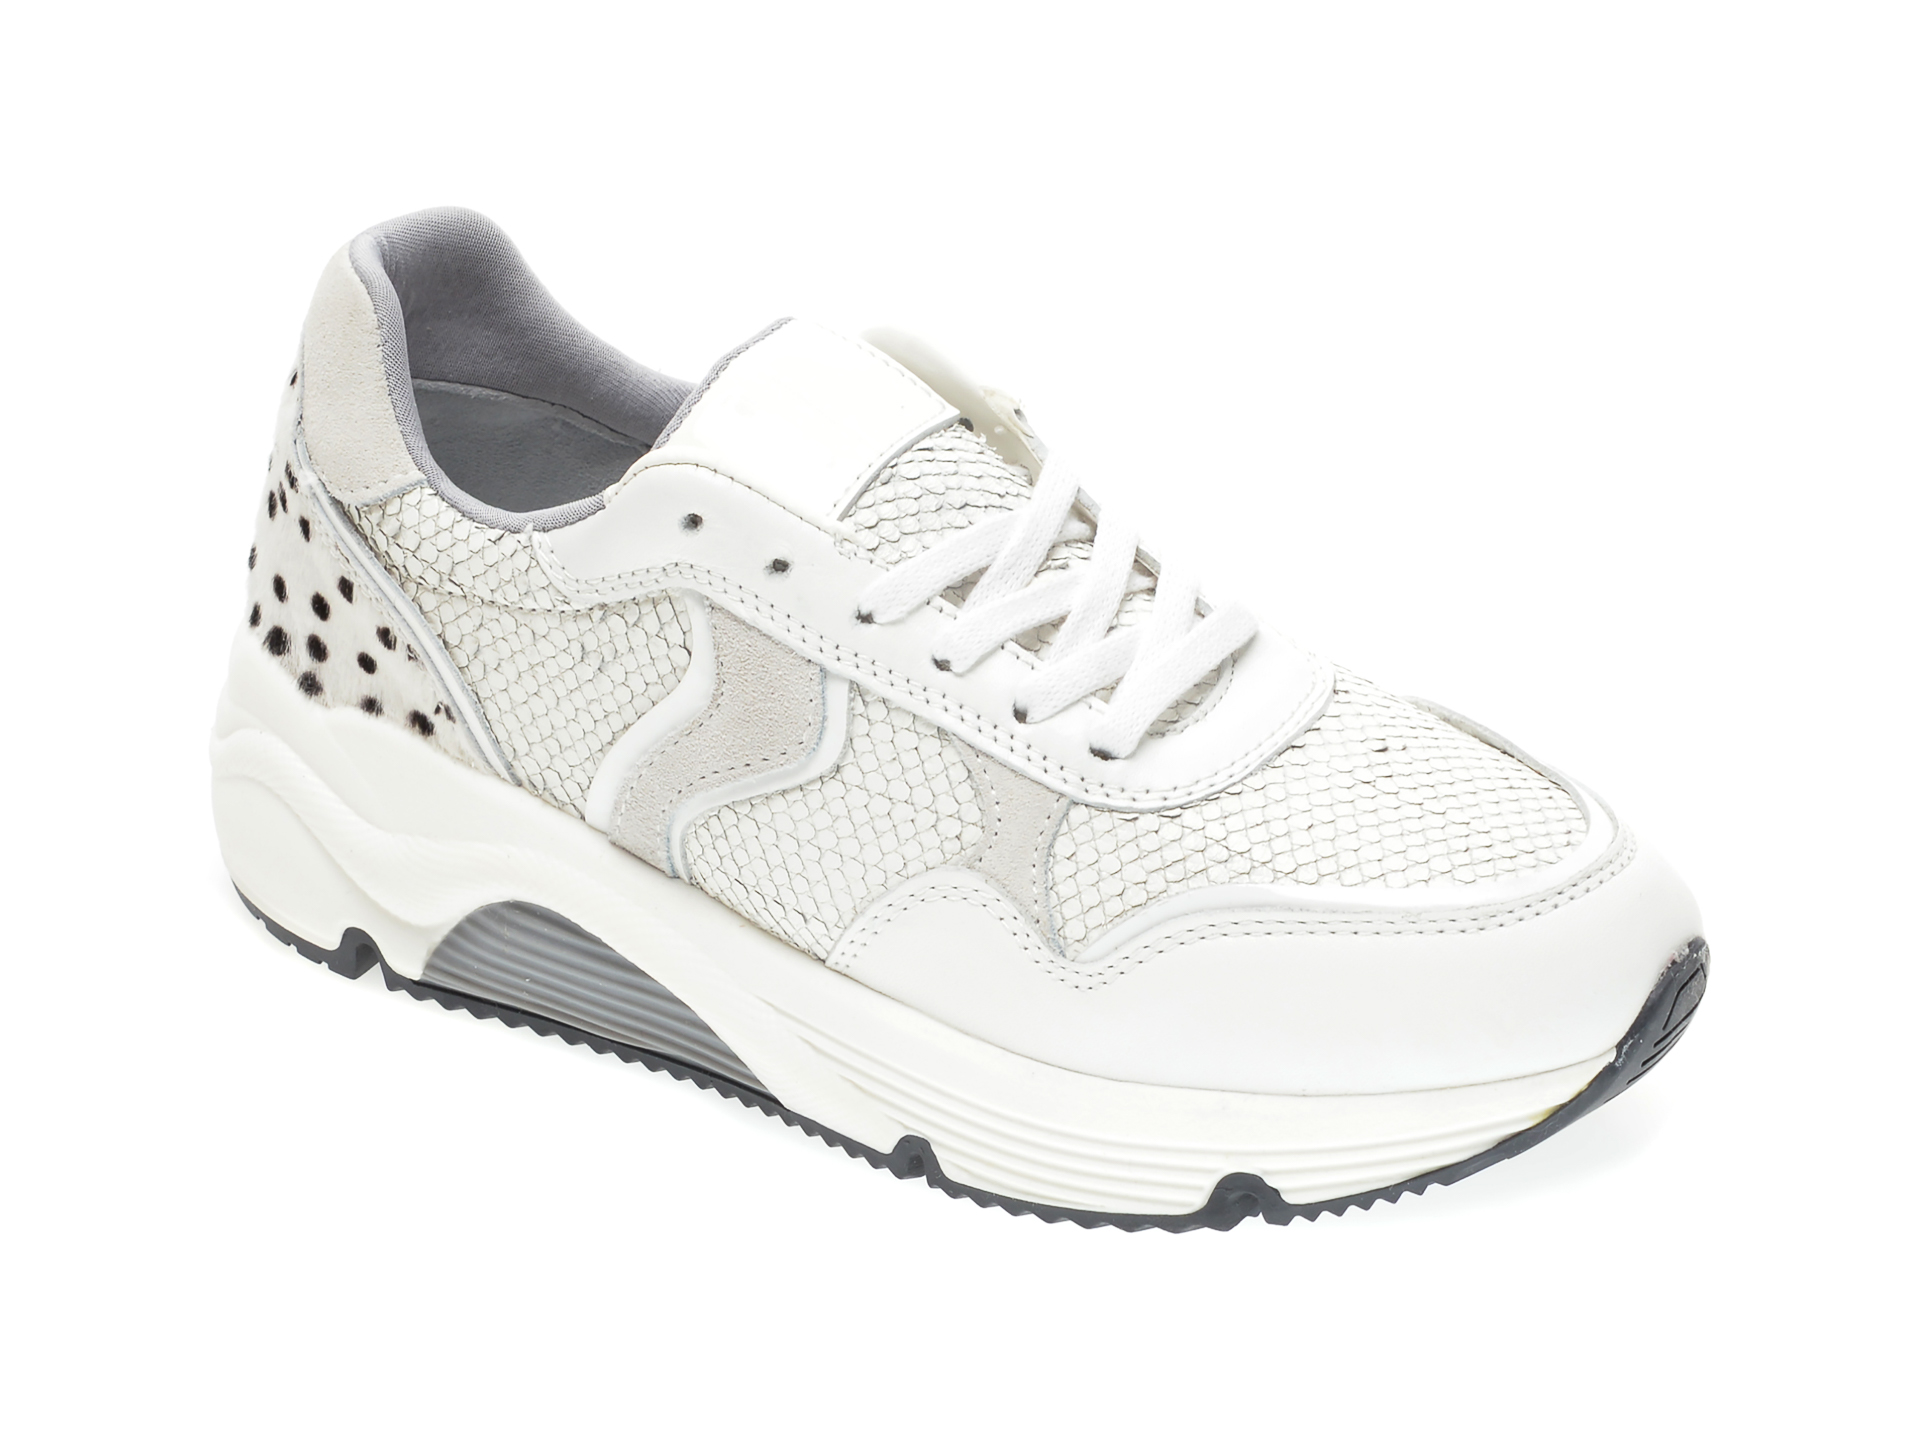 Pantofi sport FLAVIA PASSINI albi, 2911, din piele naturala